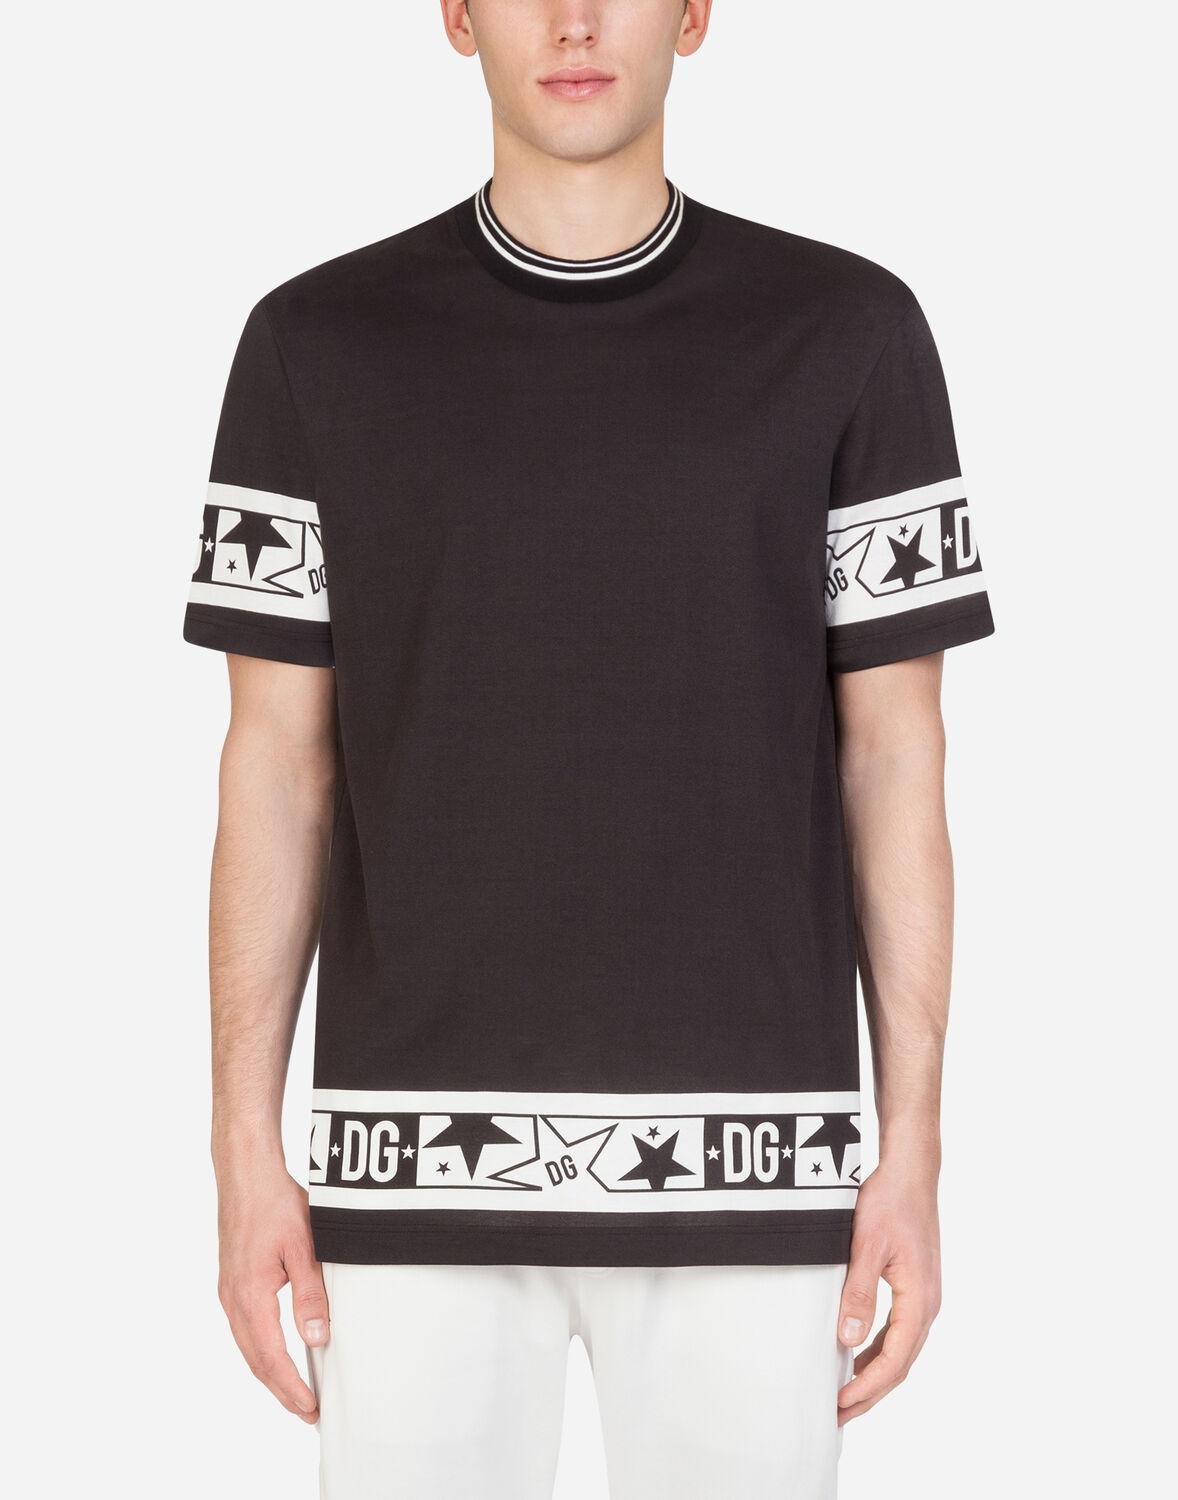 Opdater Mål Sund mad Dolce & Gabbana Cotton T-shirt With Dg Stars Print in Black for Men - Lyst